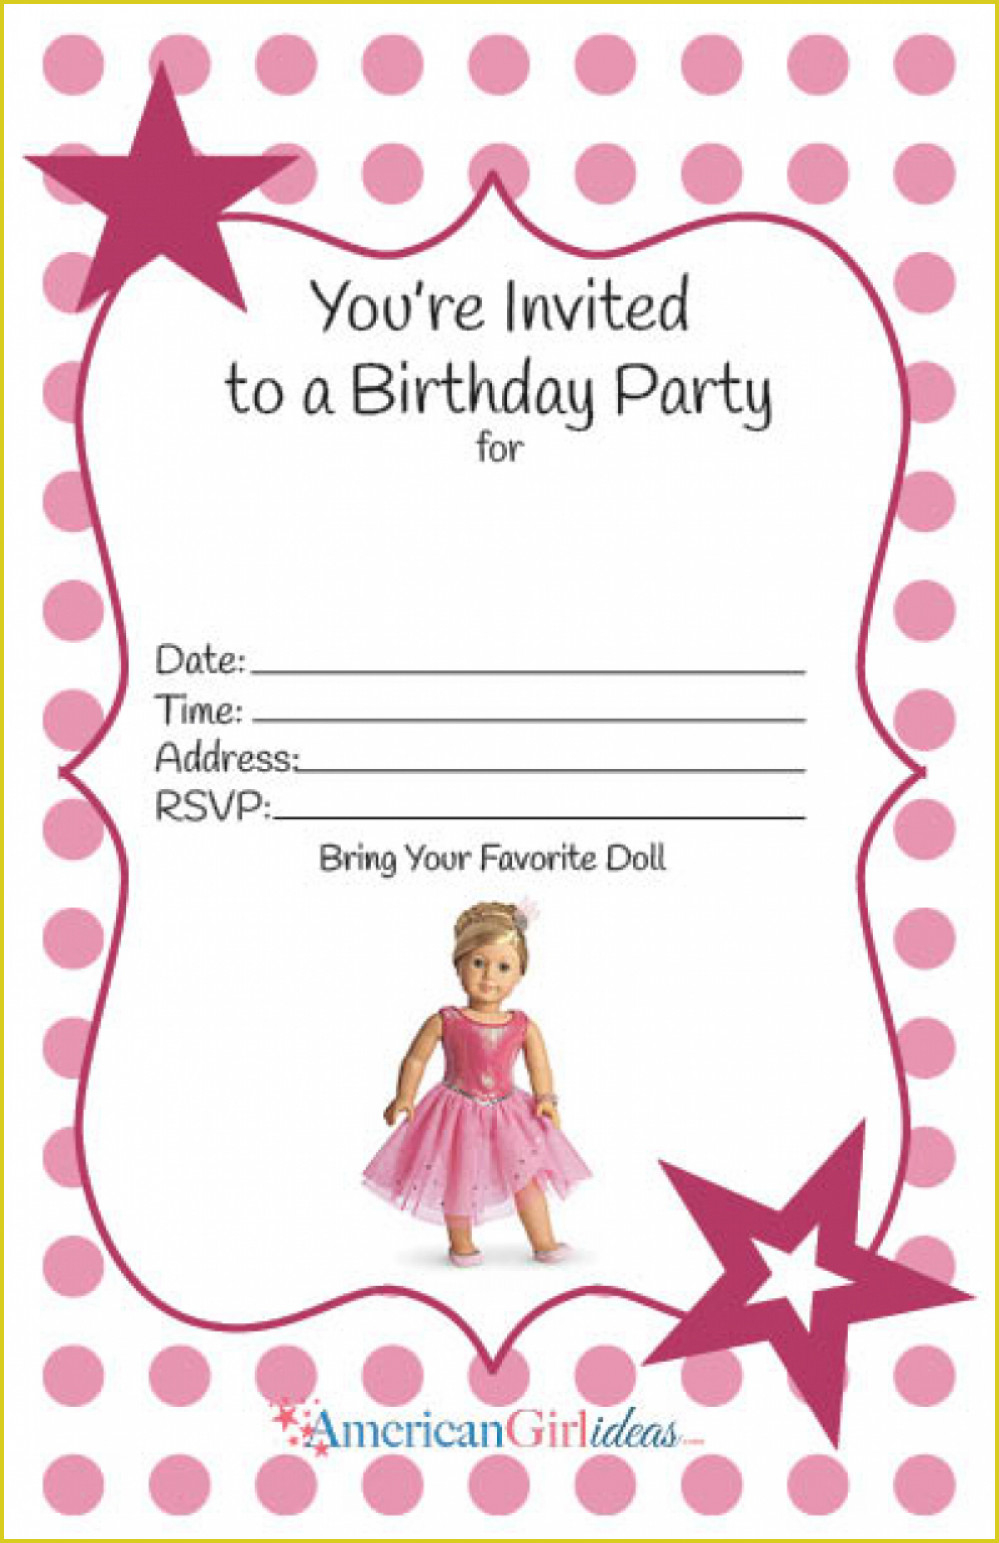 Mesmerizing American Girl Birthday Invitations Designs #3521 - American Girl Party Invitations Free Printable